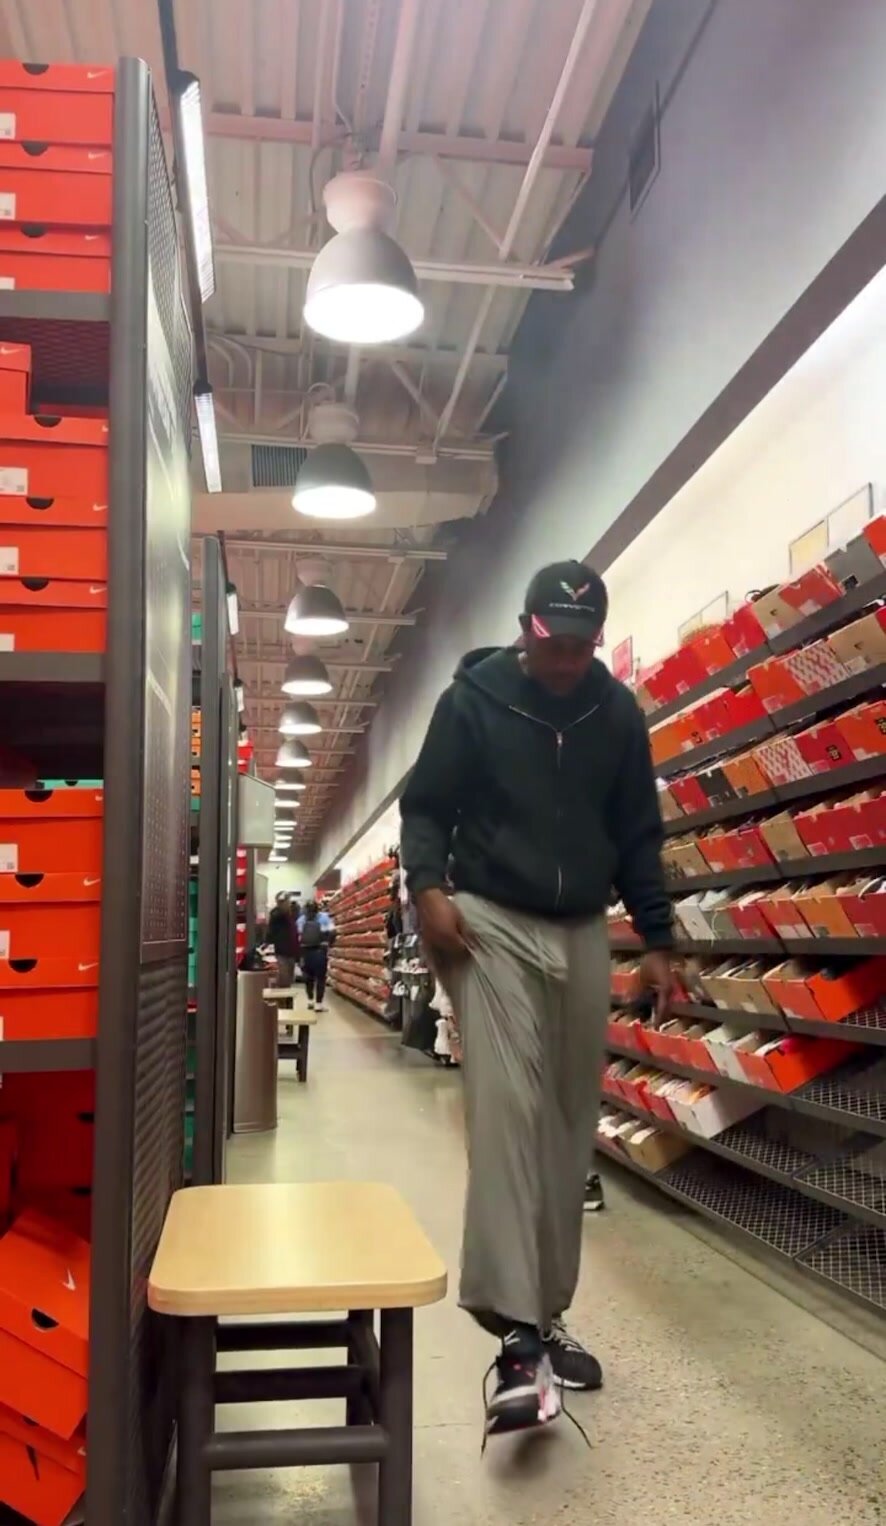 Freeballing while sneaker shopping